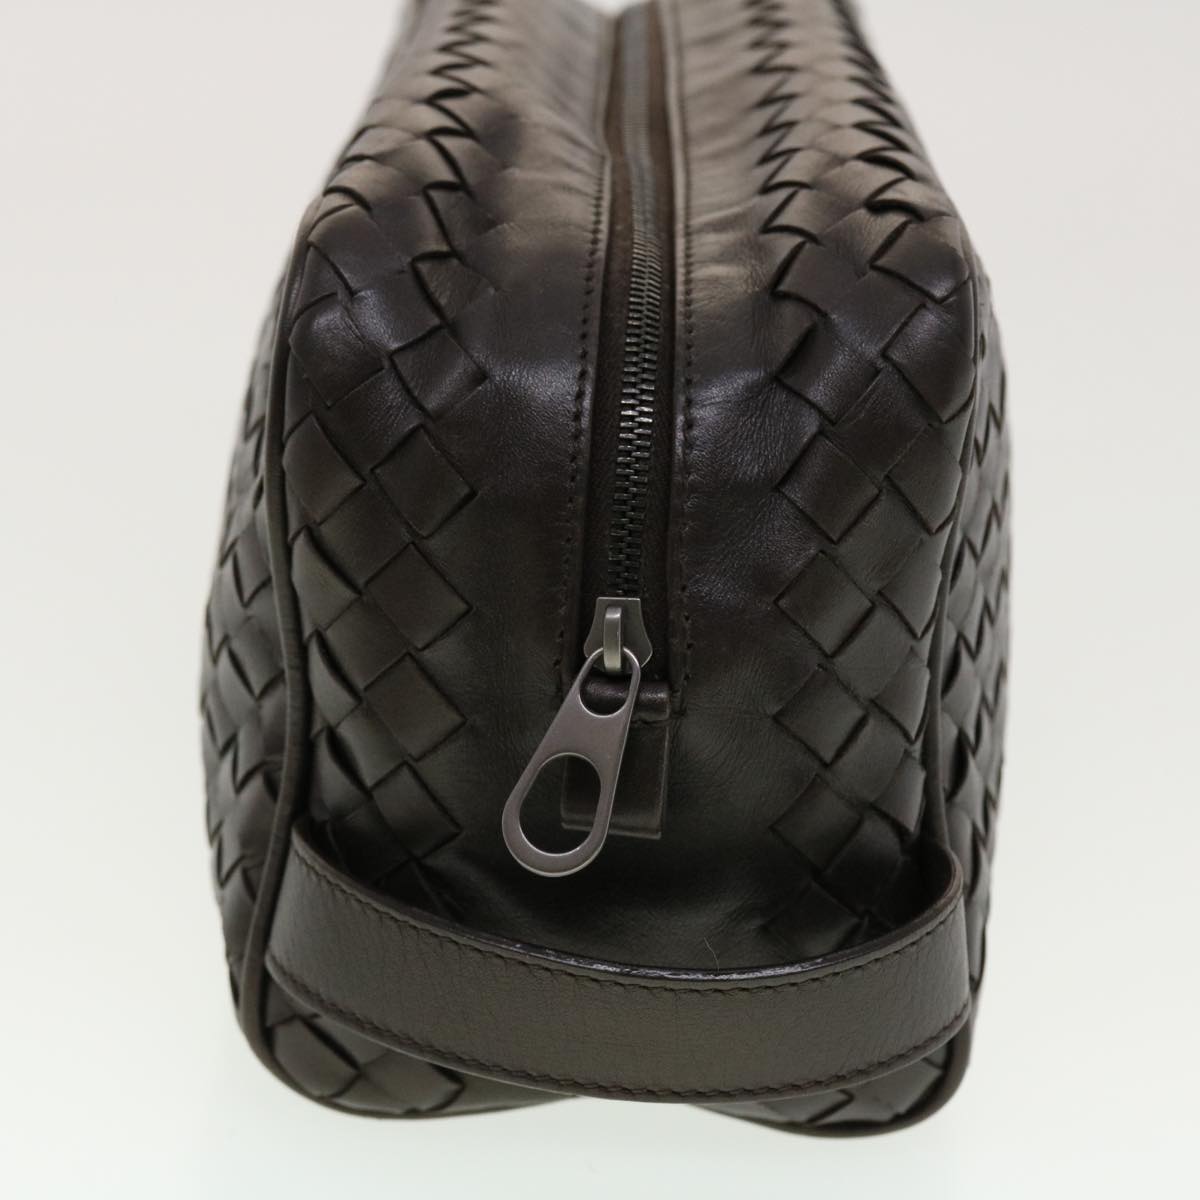 BOTTEGAVENETA INTRECCIATO Clutch Bag Leather Dark Brown Auth 41600